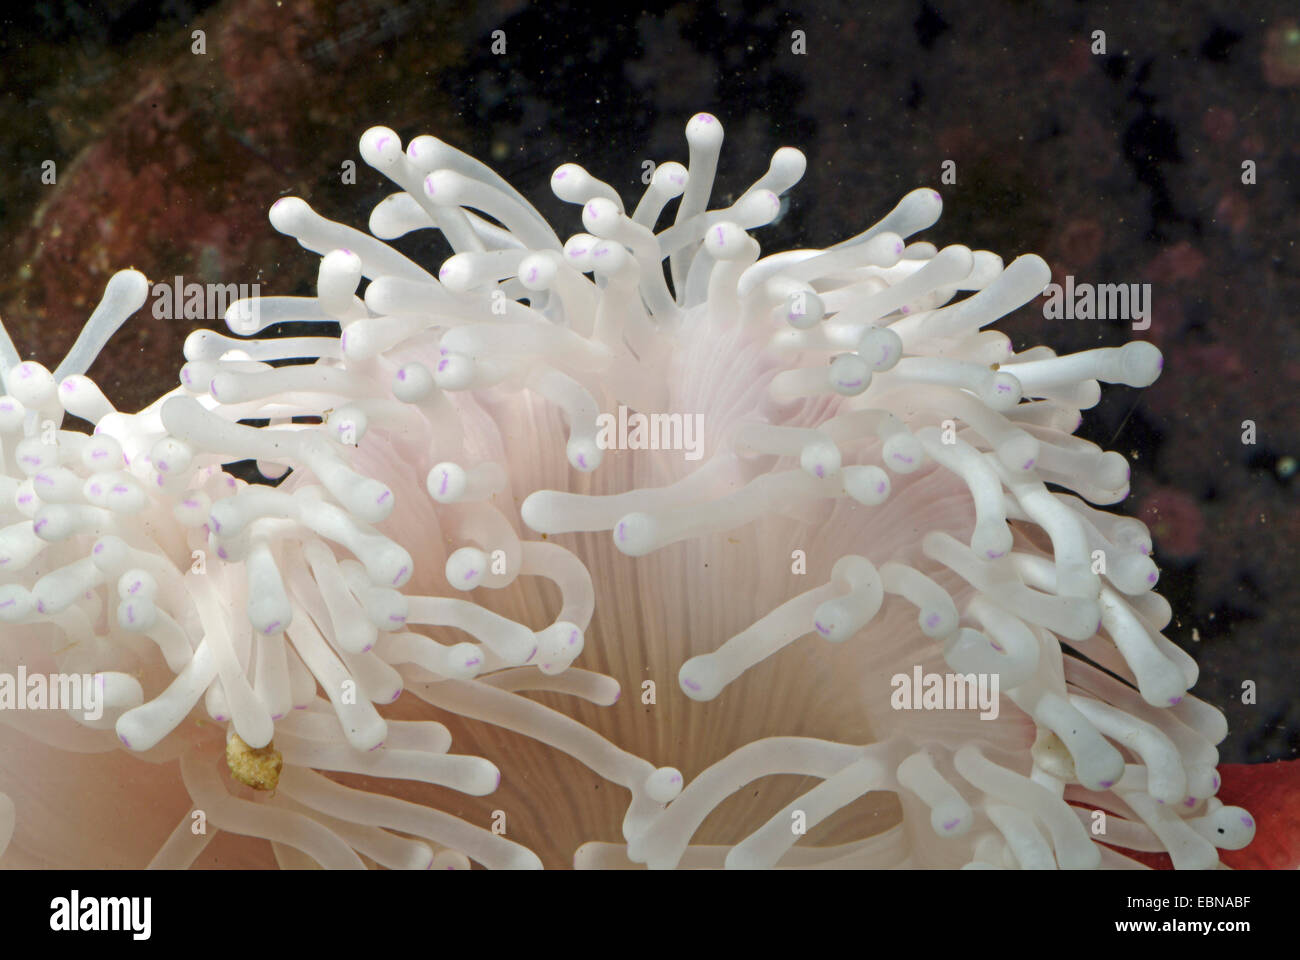 Anémona magnífica, magnífica anémona de mar (Heteractis magnifica), tentáculos de una anémona magnífica Foto de stock